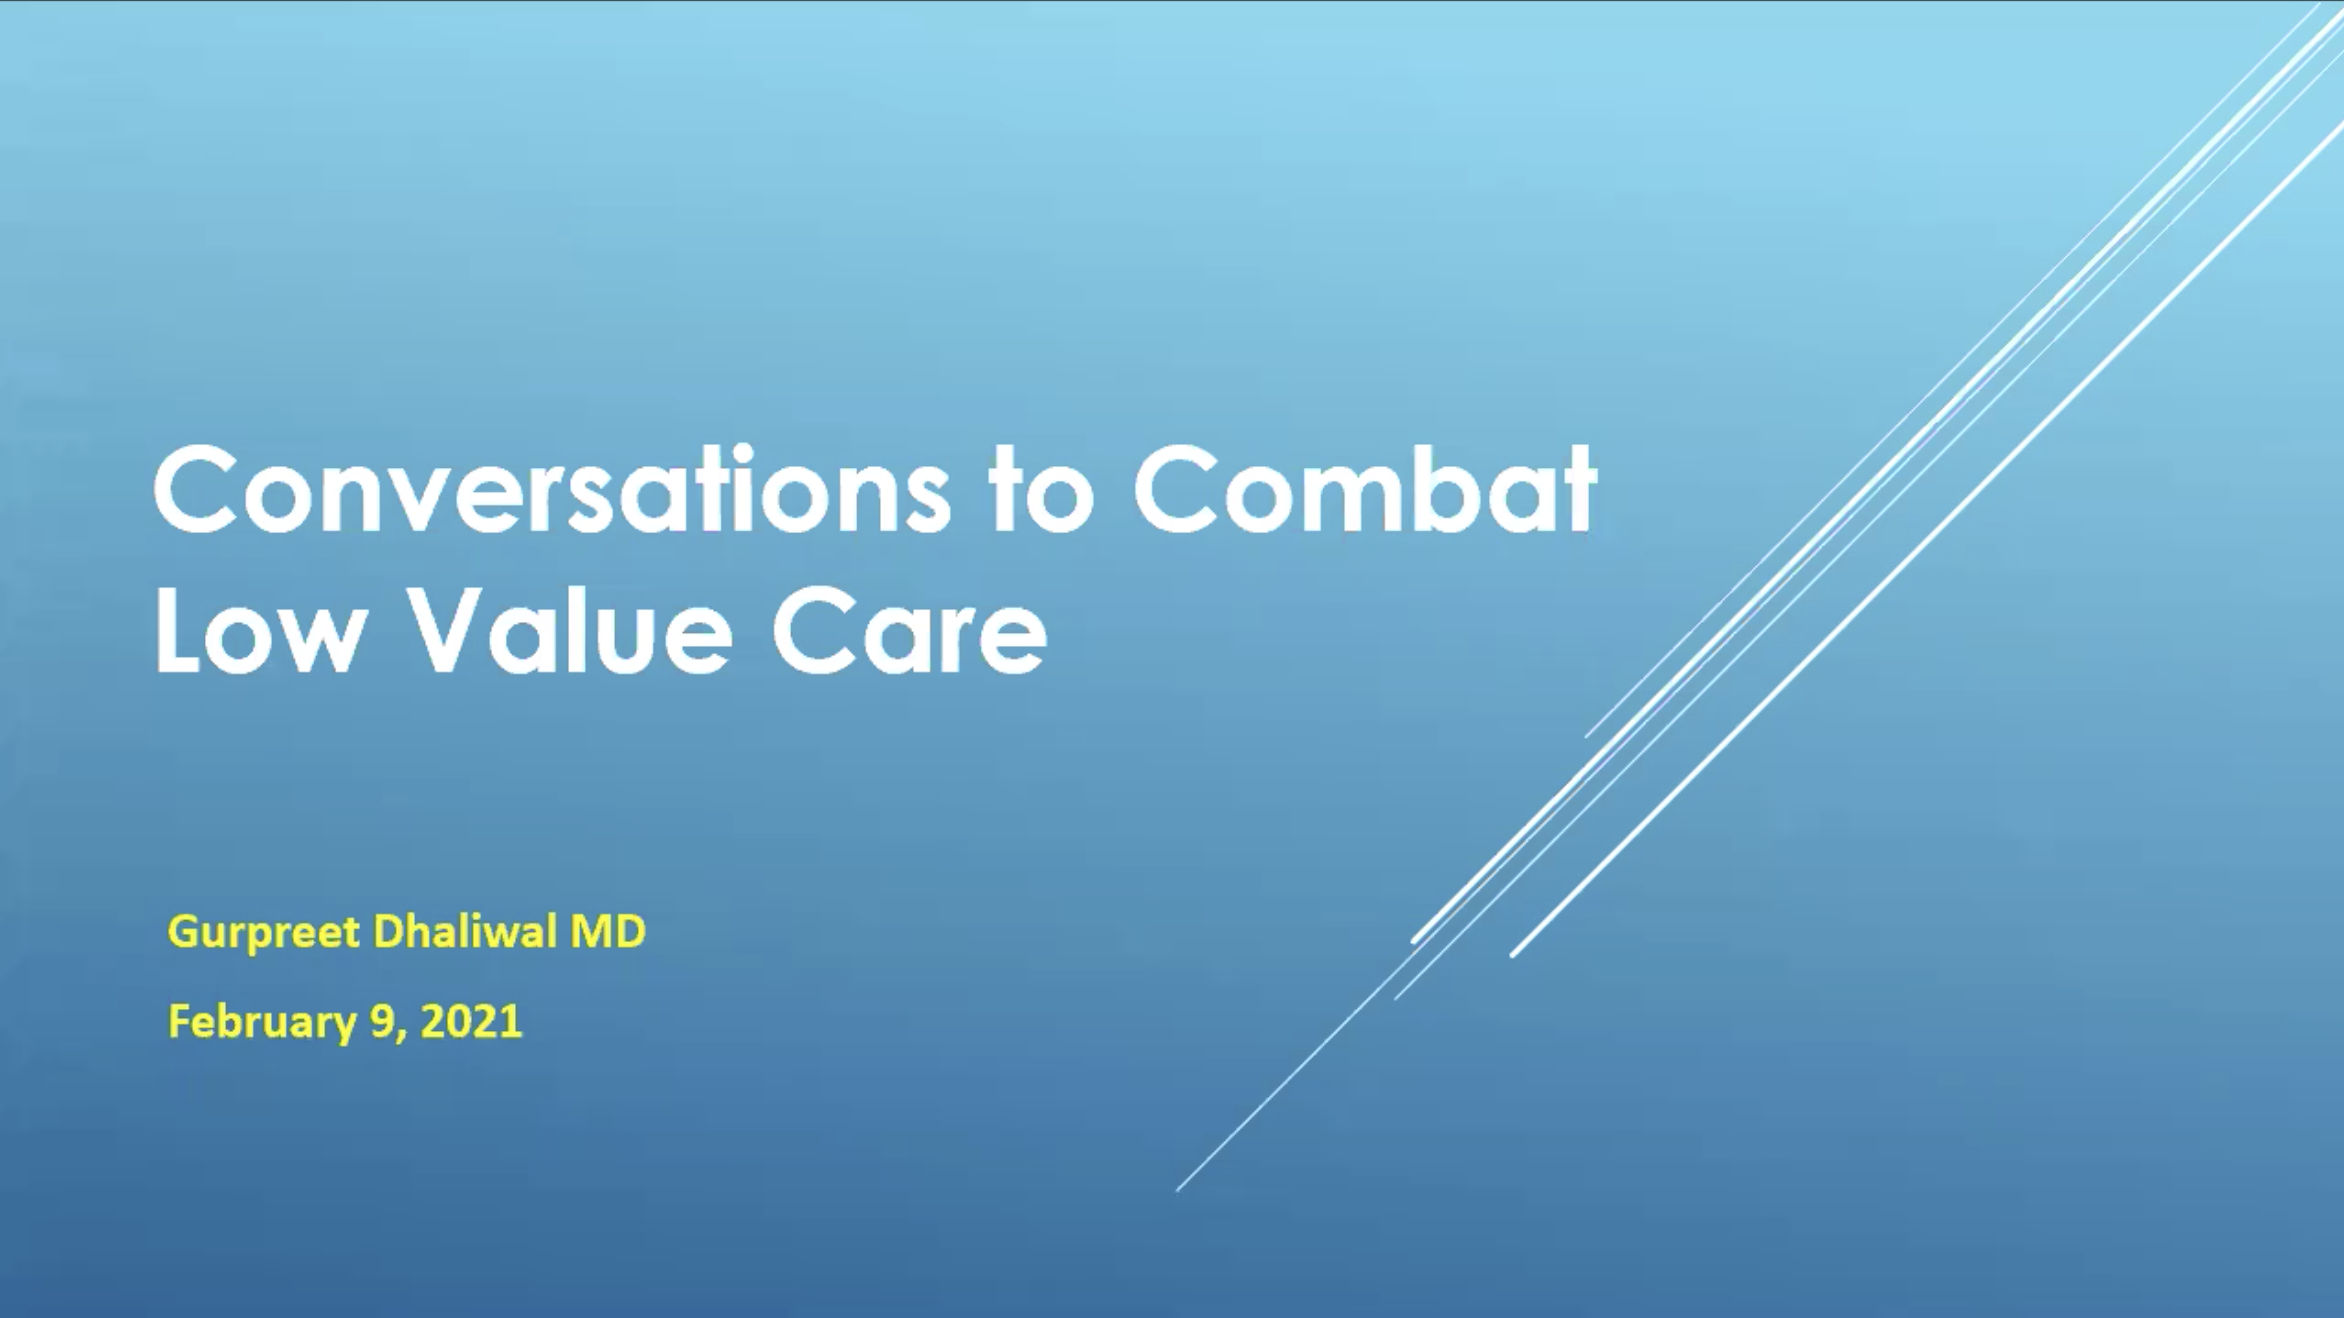 Title: Conversations to Combat Low Value Care